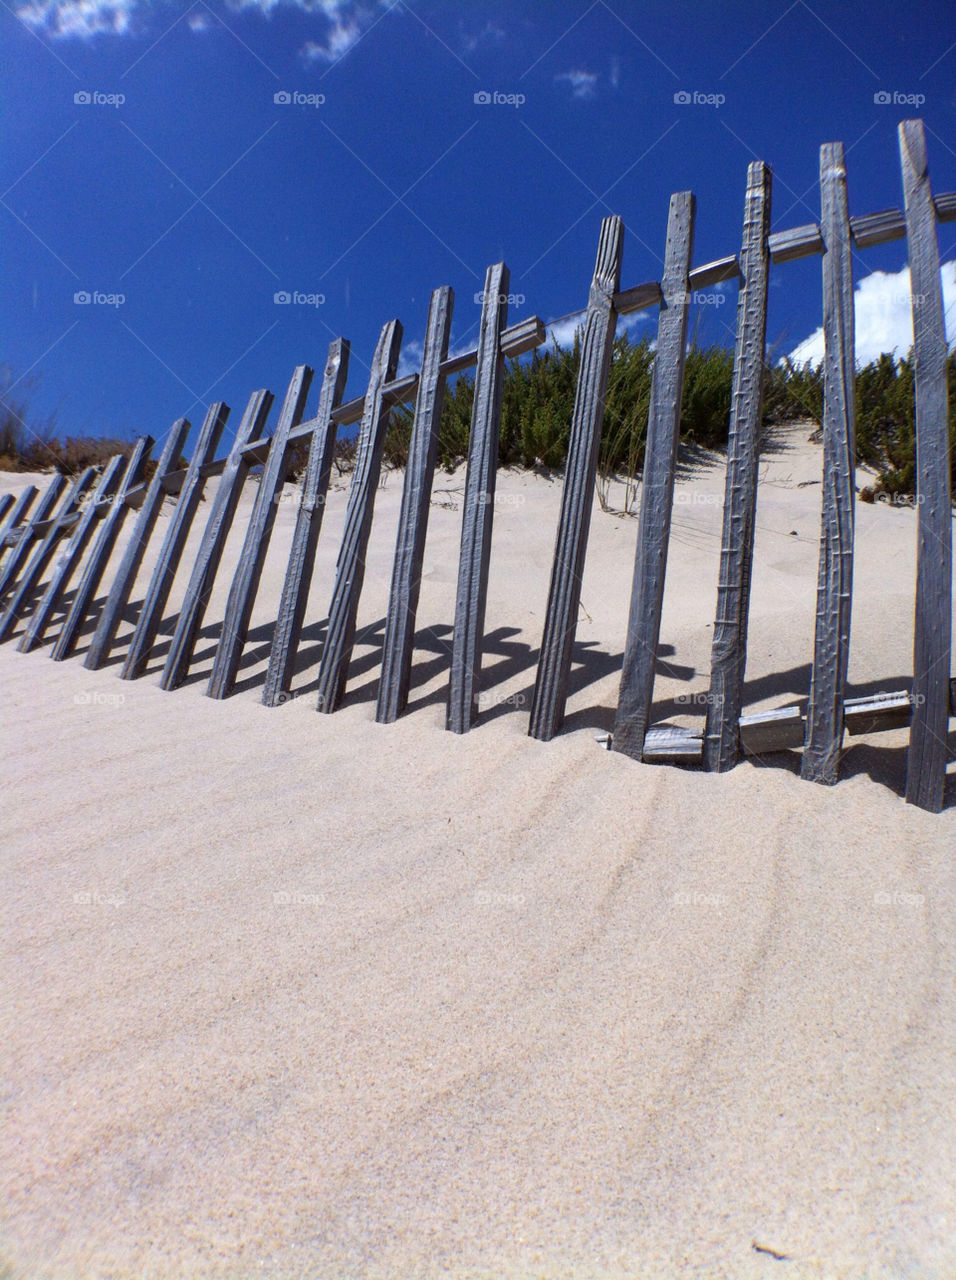 beach summer sands dunes by themuttley